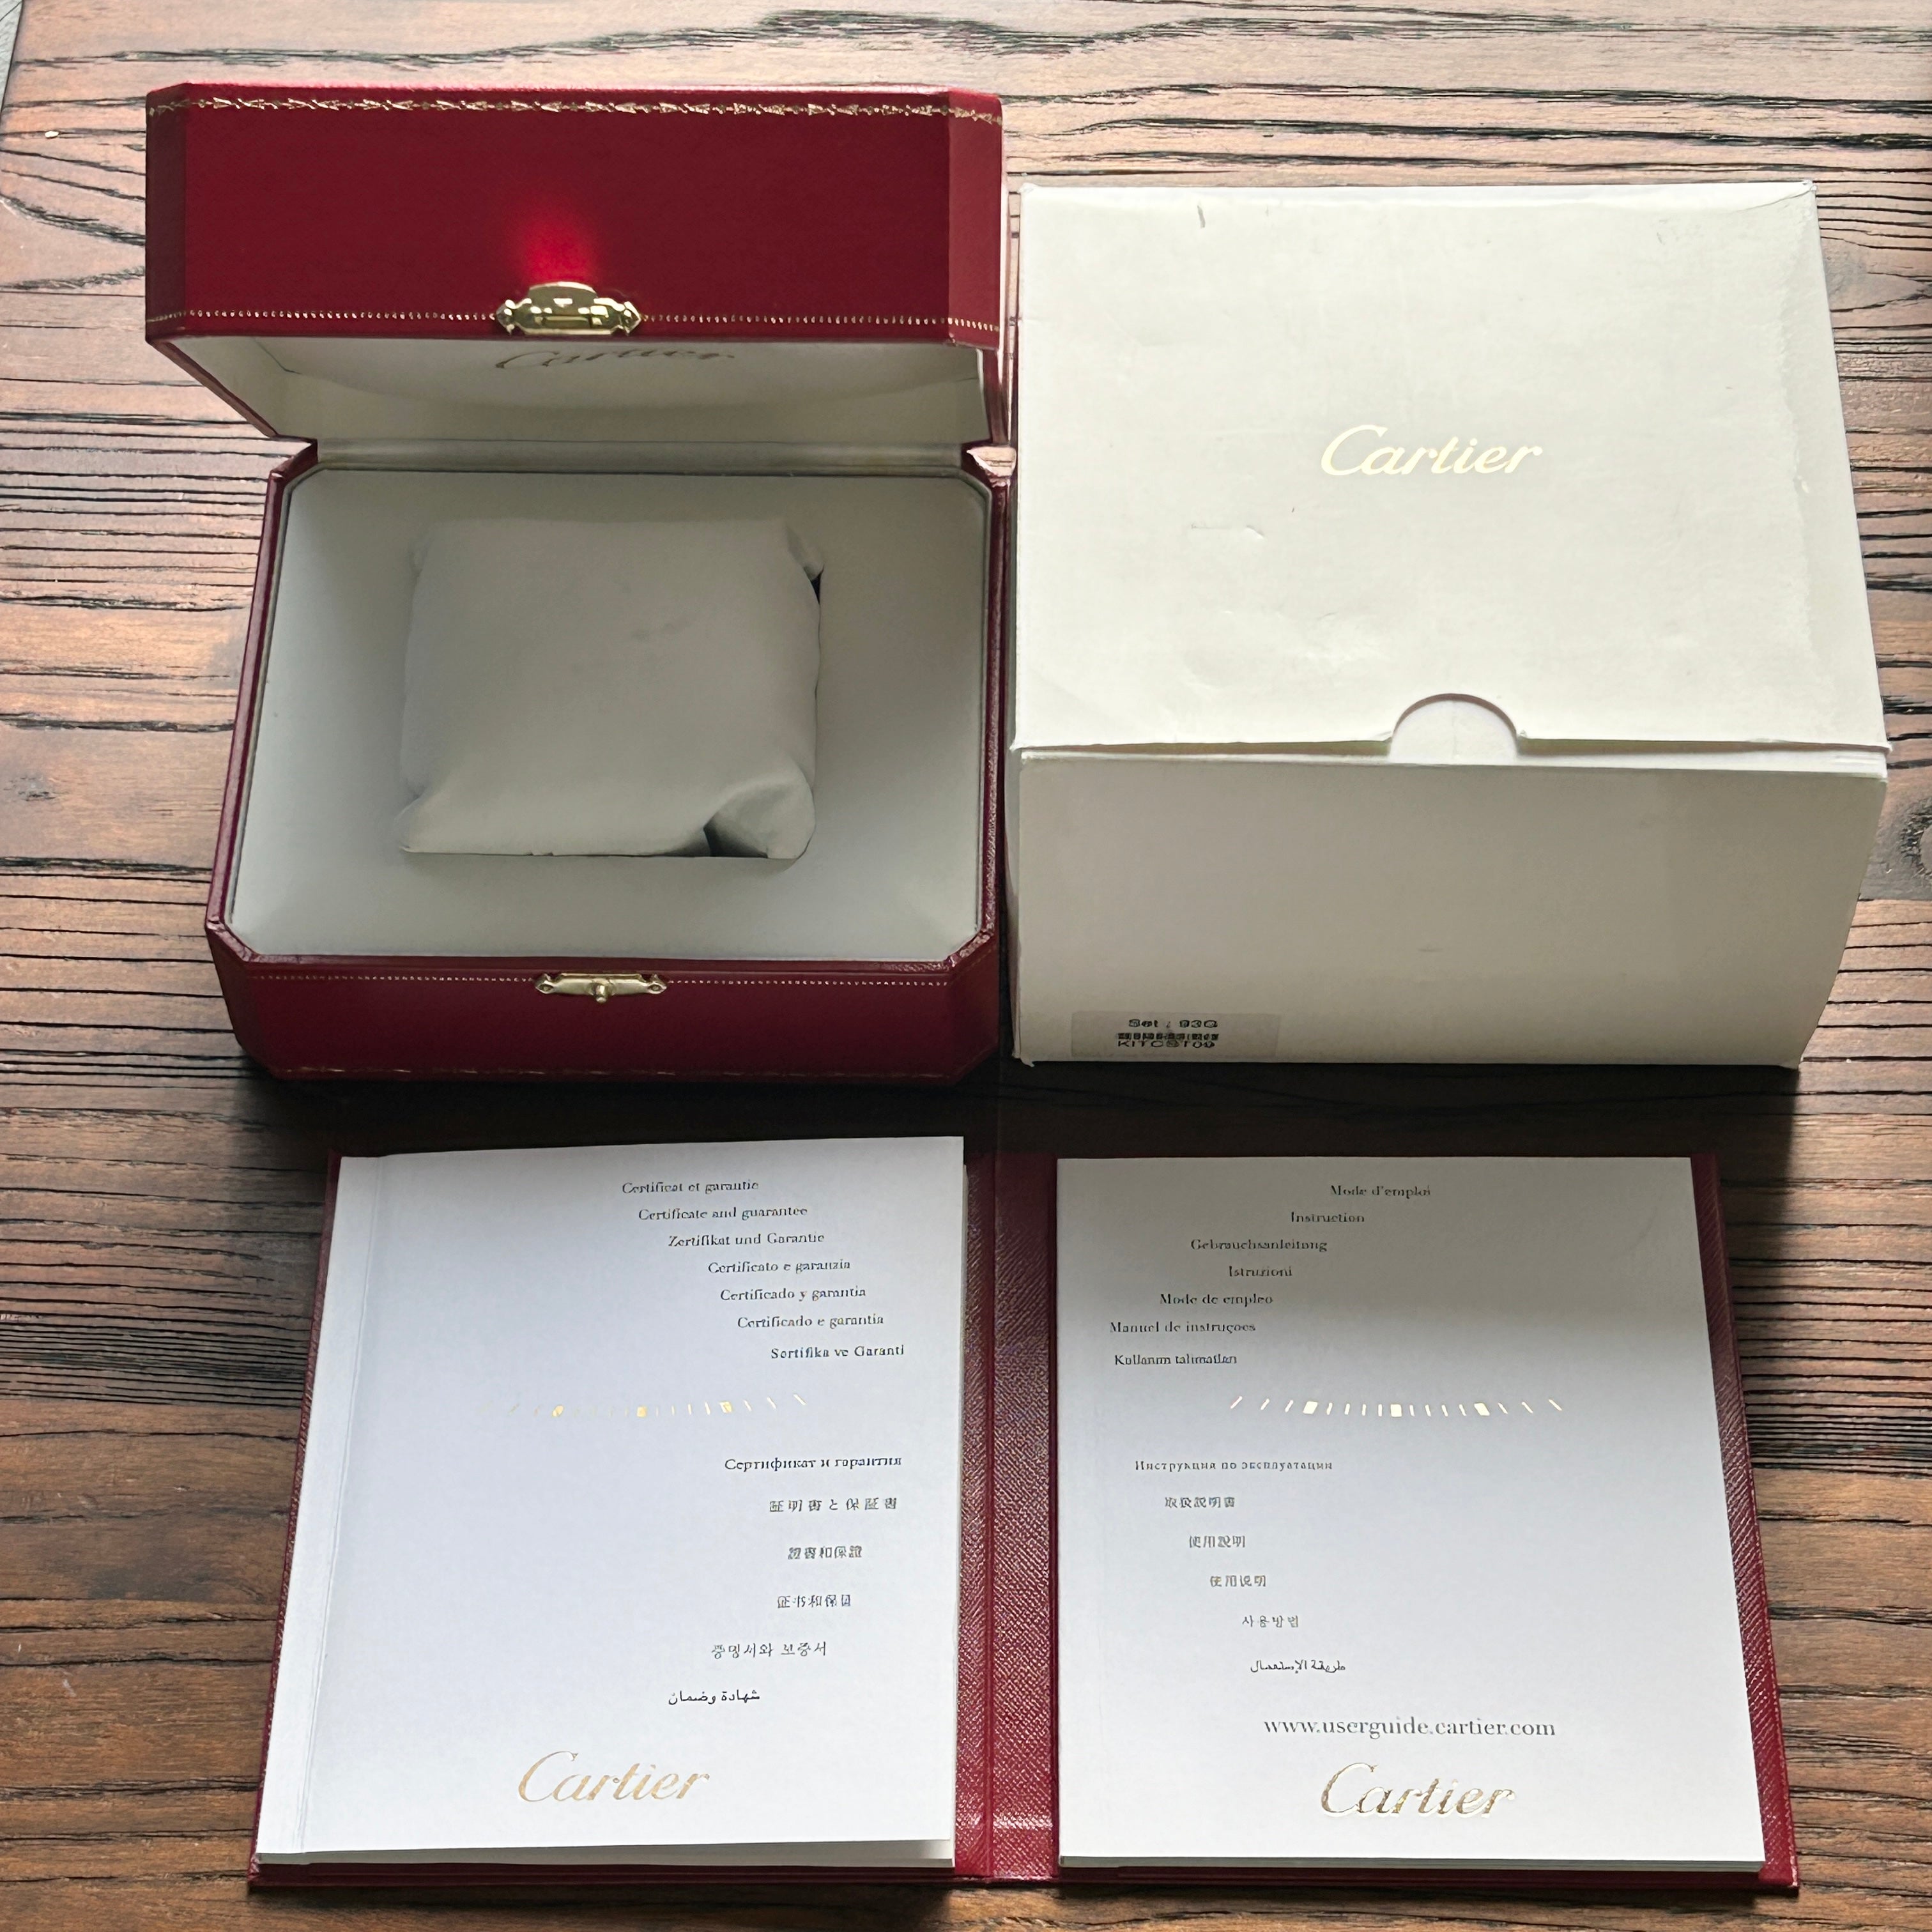 【Cartier】タンクアメリカンLM 18KYG 付属品付き